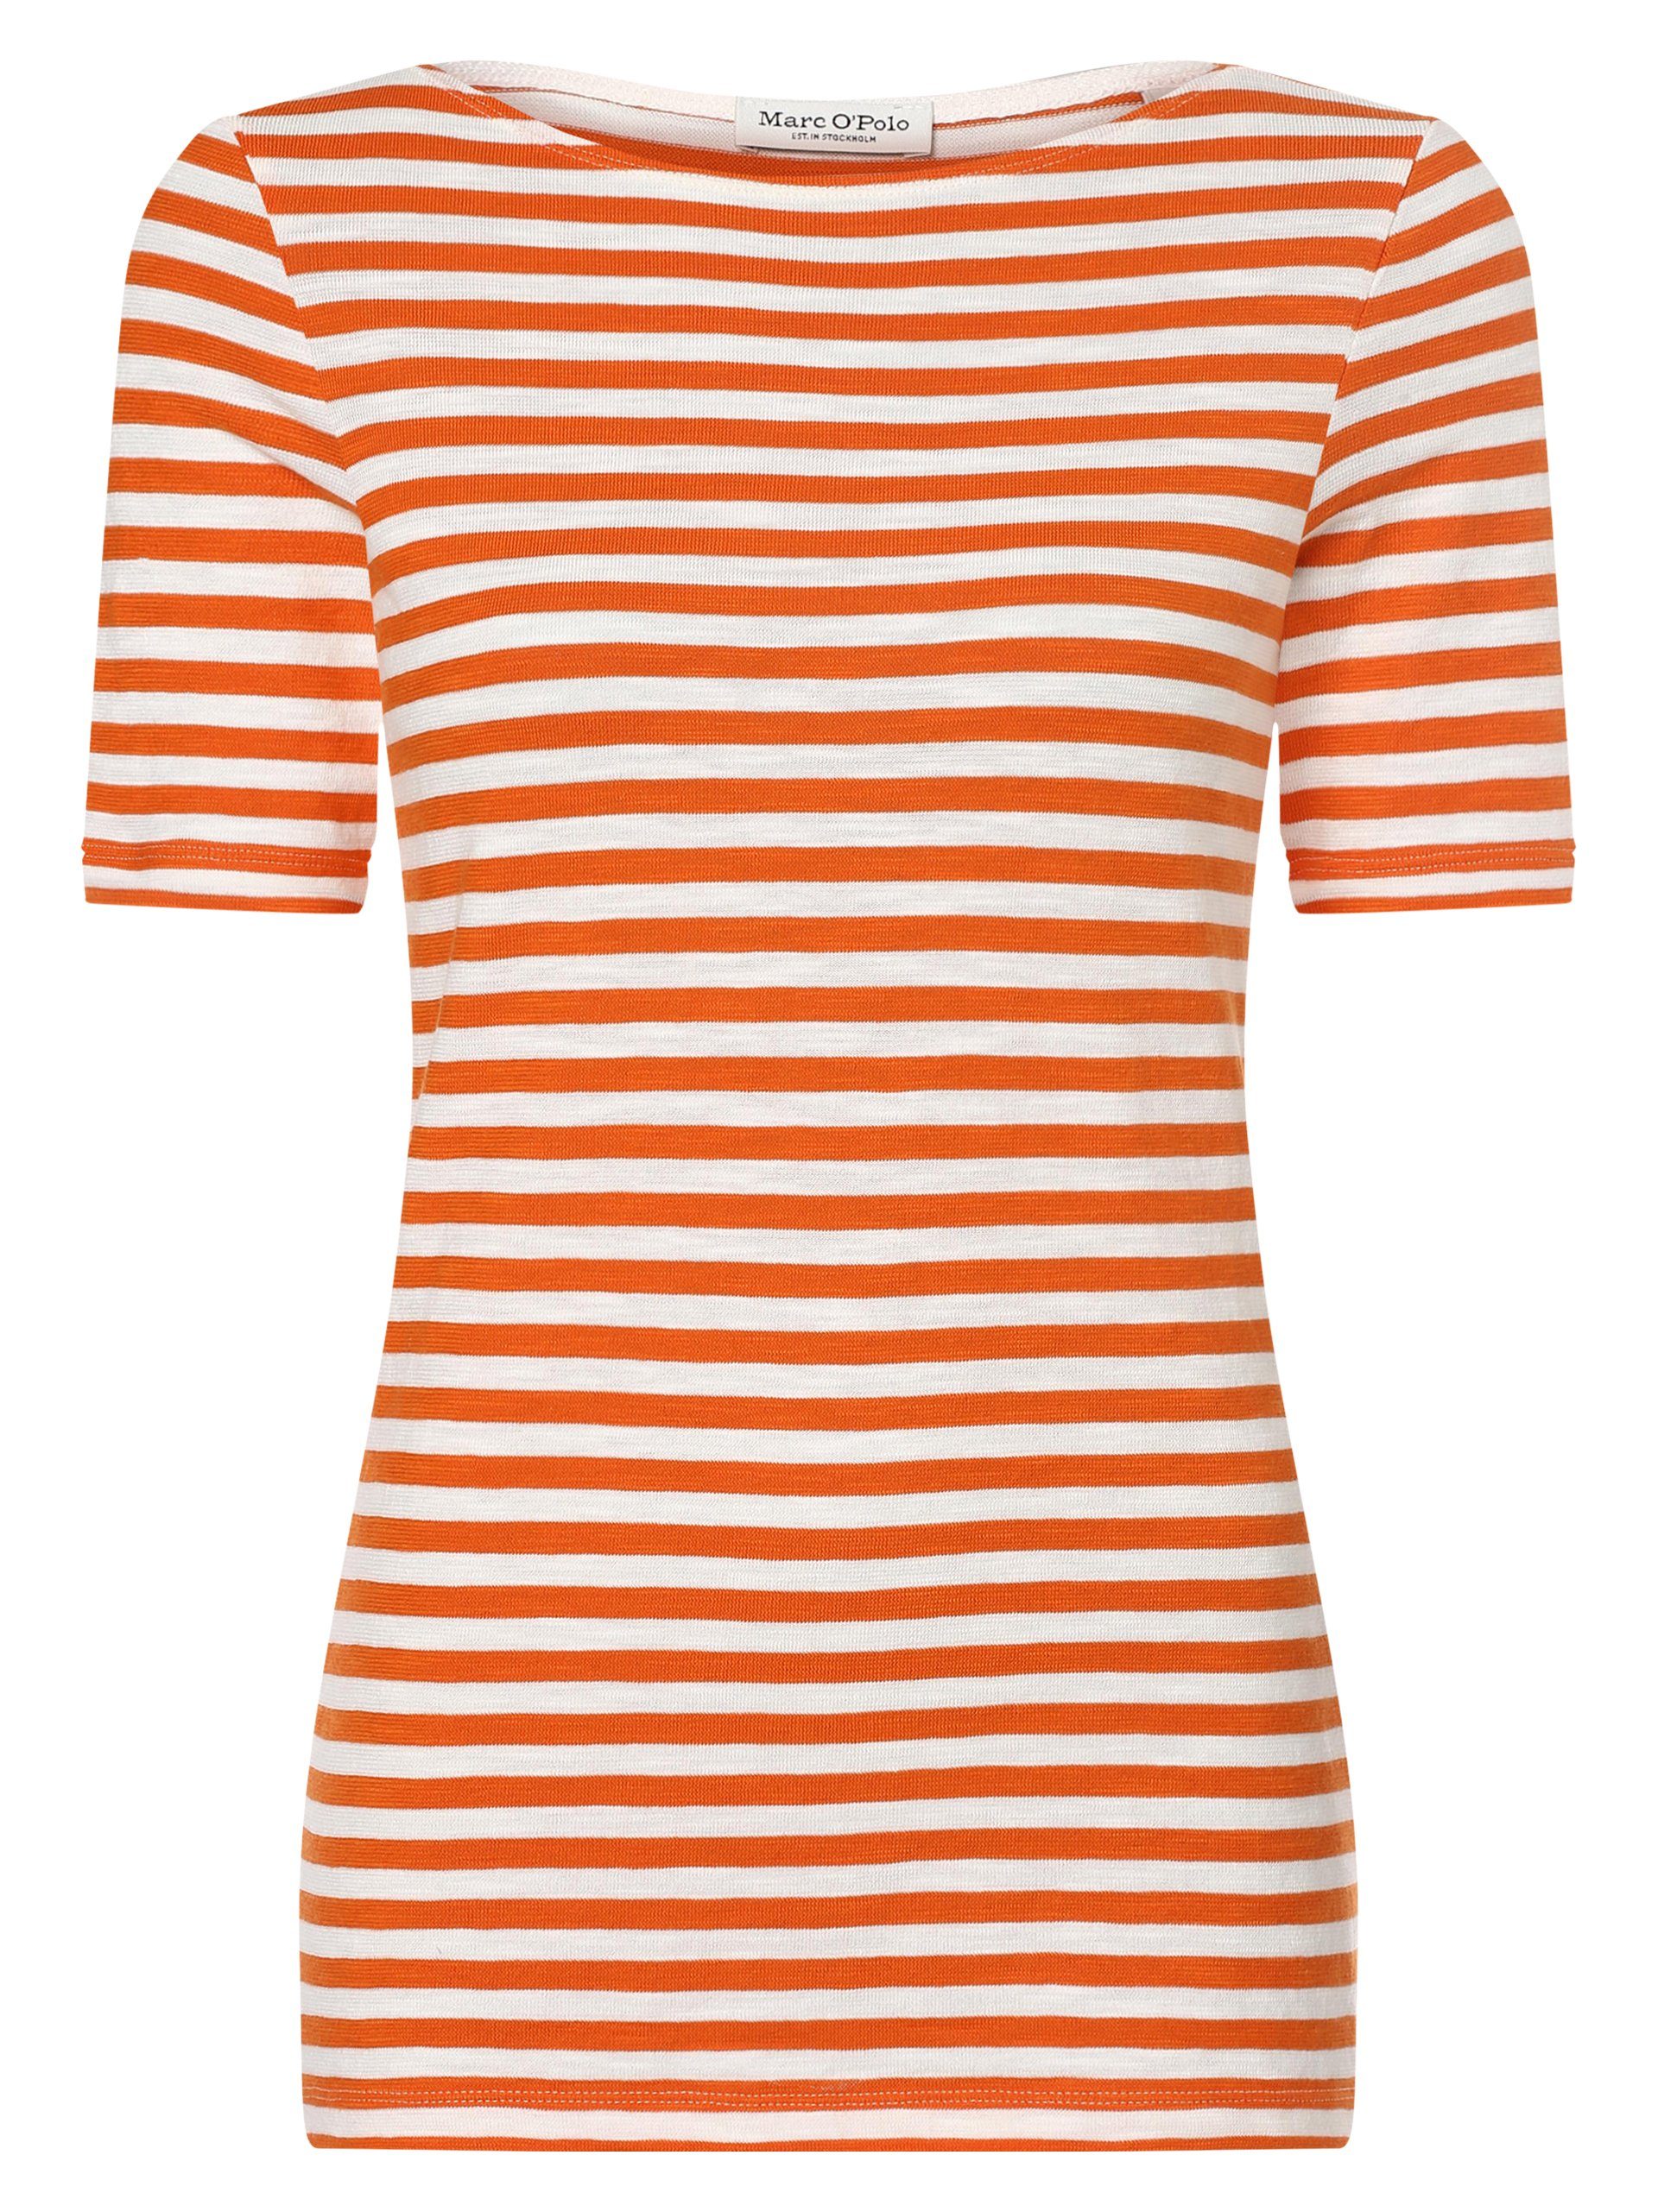 weiß O'Polo Marc T-Shirt orange